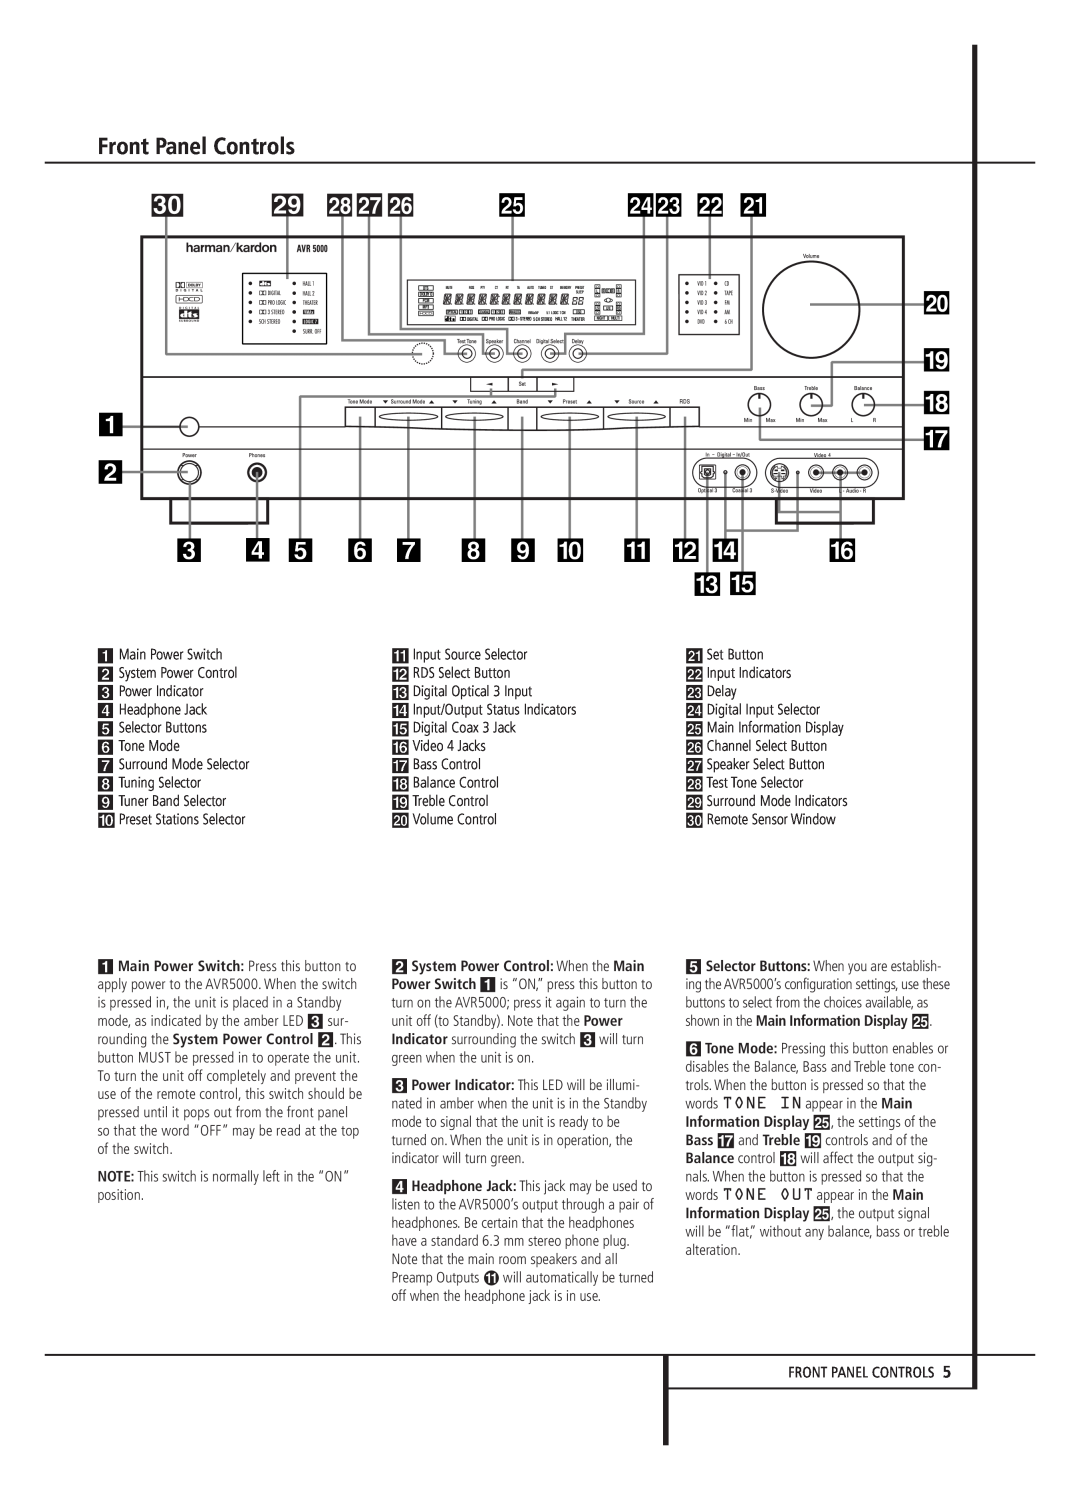 Harman-Kardon AVR 5000 owner manual Front Panel Controls, Úò  Ô, 3 4 5 6 7 8 9 ! @ $ 